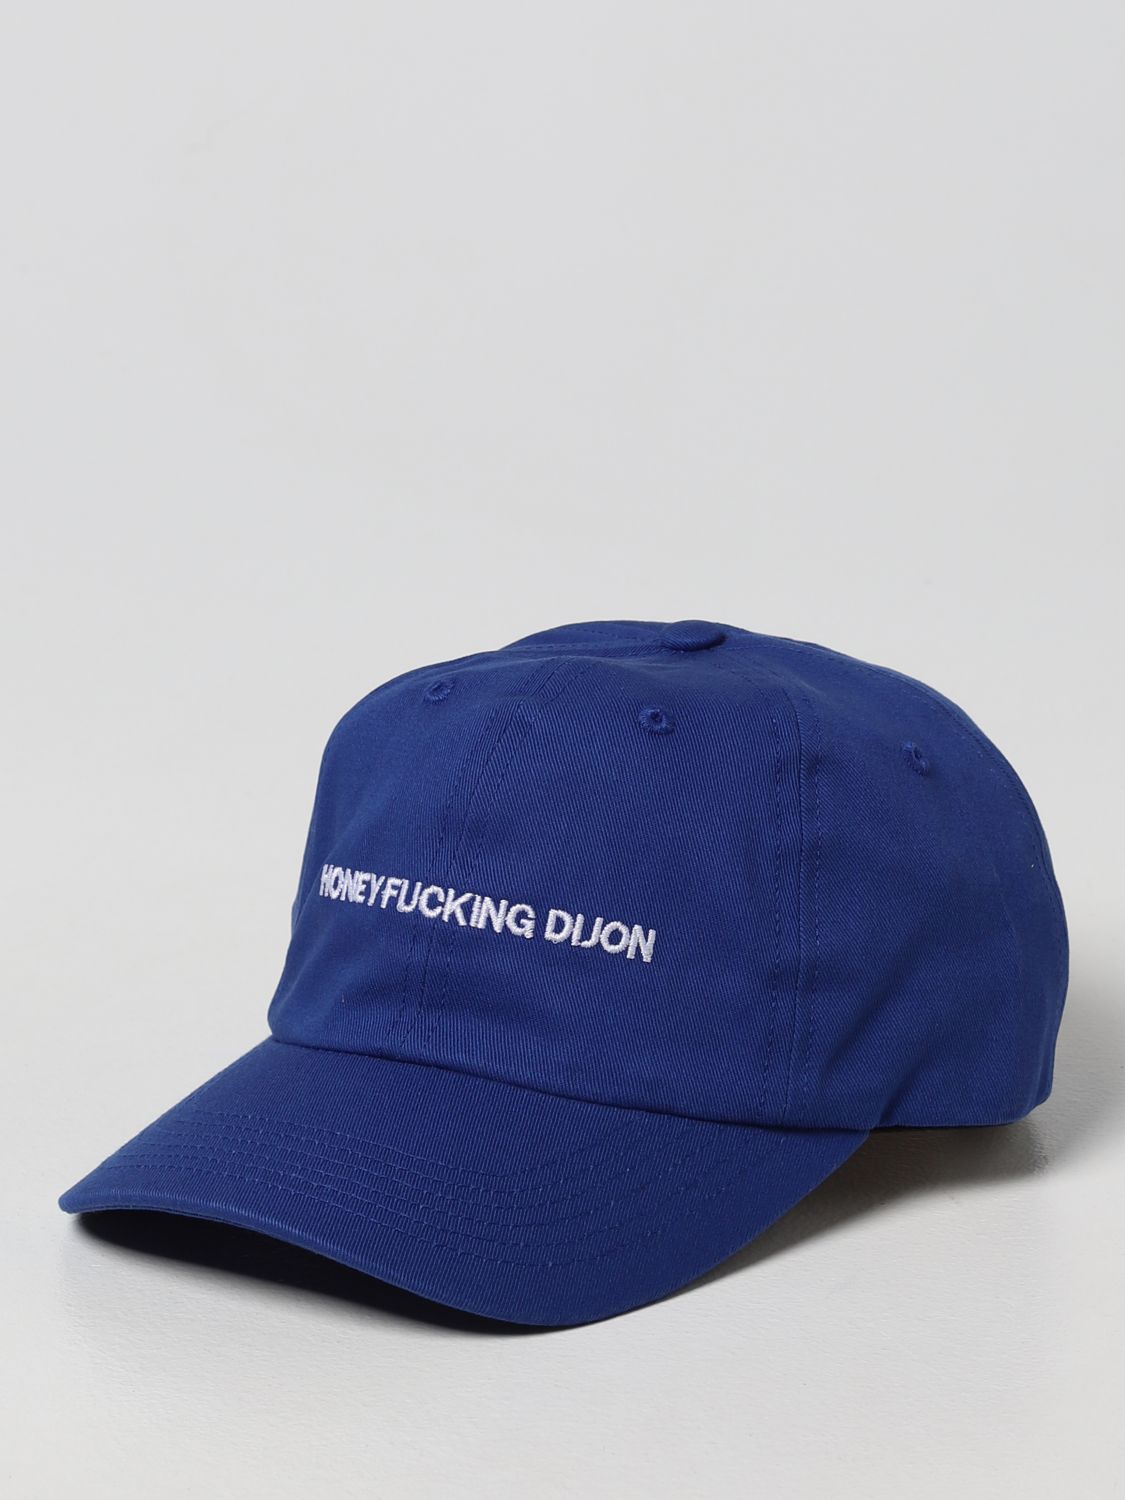 Hat Honey Fucking Dijon: Honey Fucking Dijon hat for man blue 1